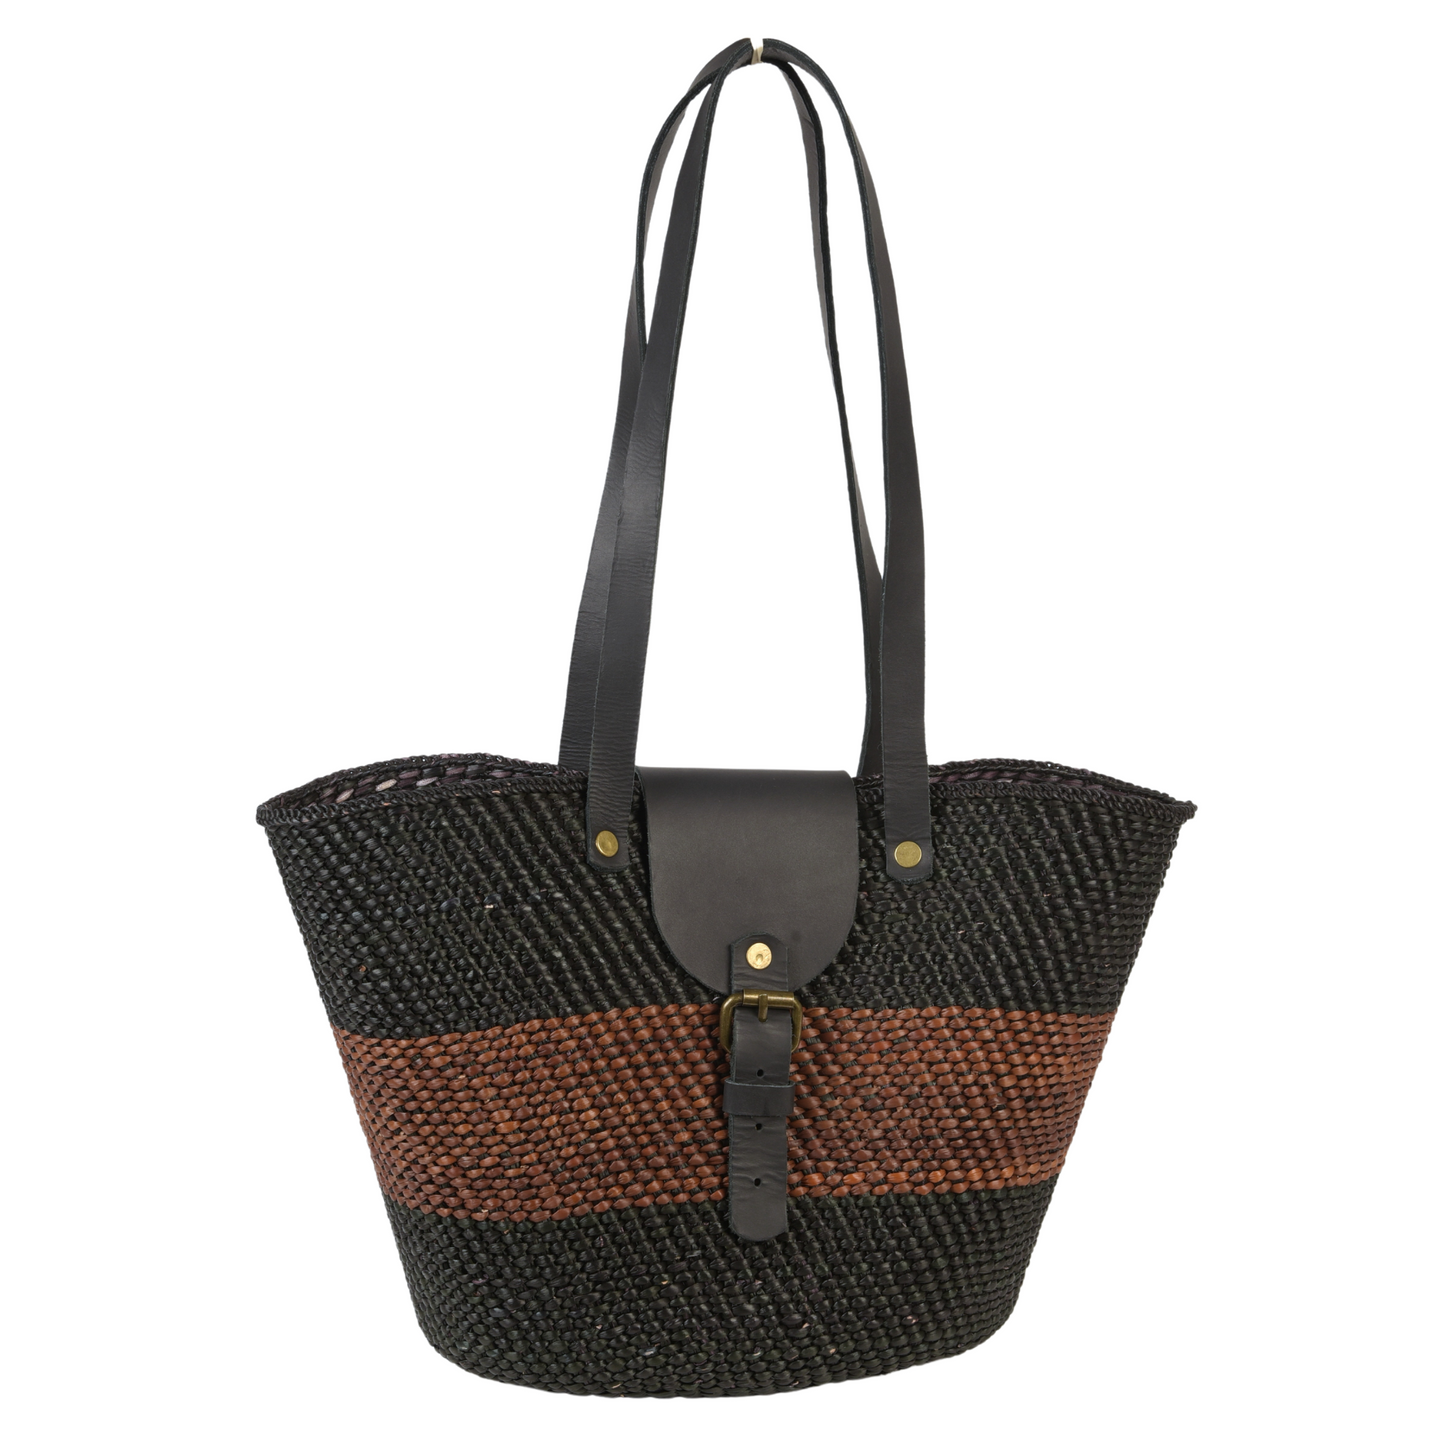 Iringa Handwoven Handbag Basket with leather flap (Double Straps)